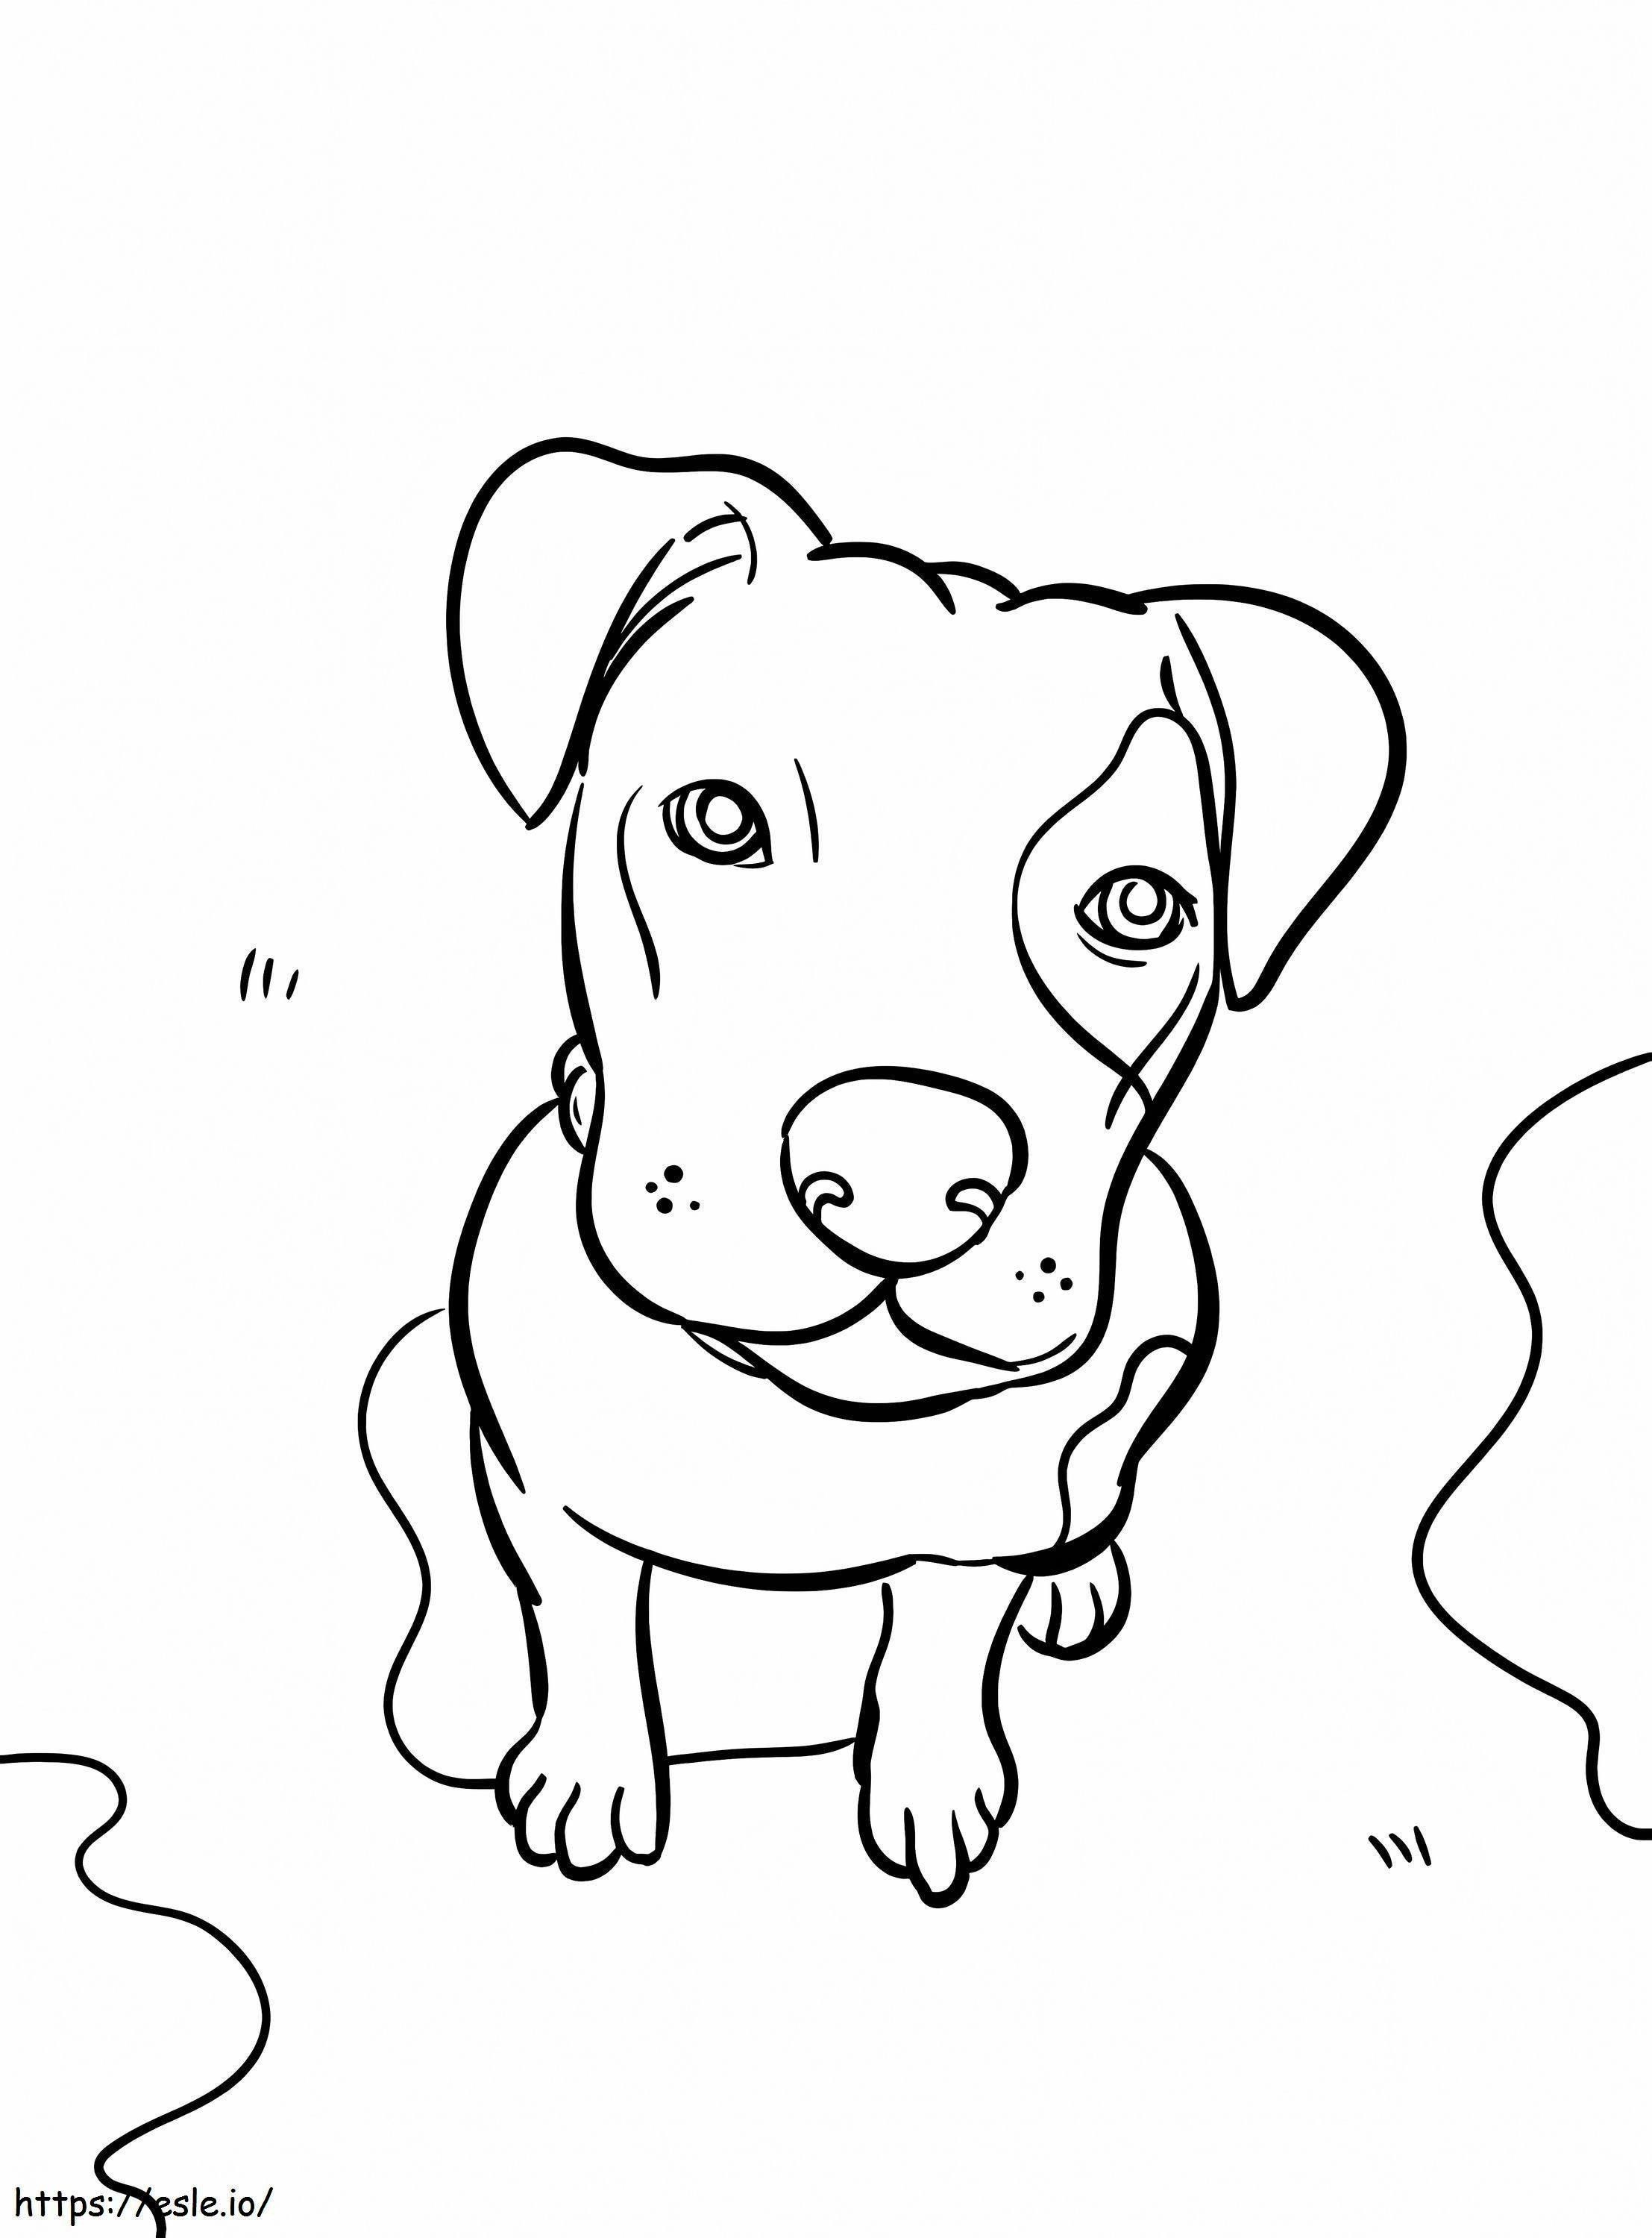 Big Dog coloring page